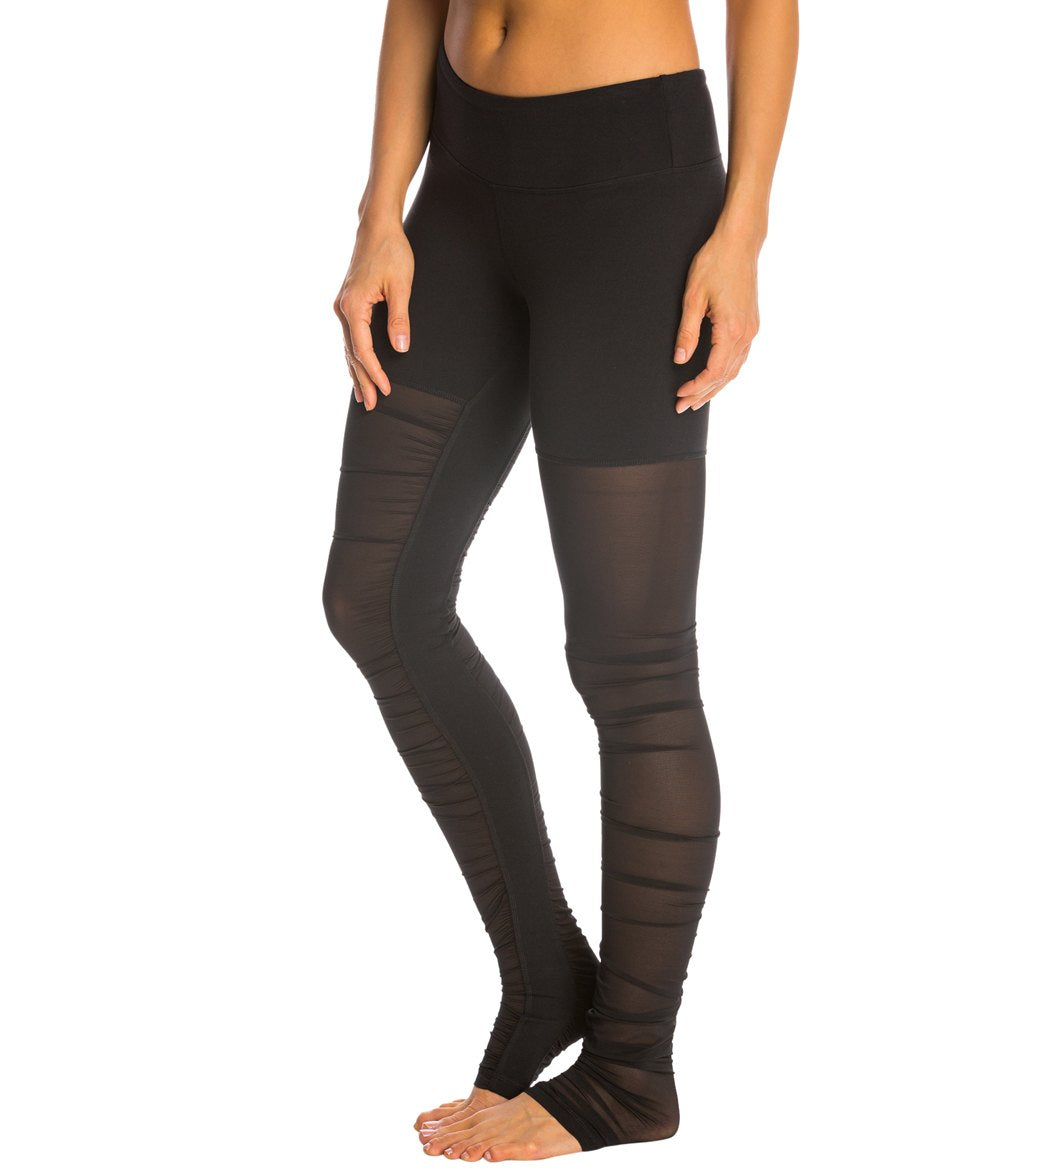 Buy Alo Yoga® Pulse Barre Socks - Black At 27% Off